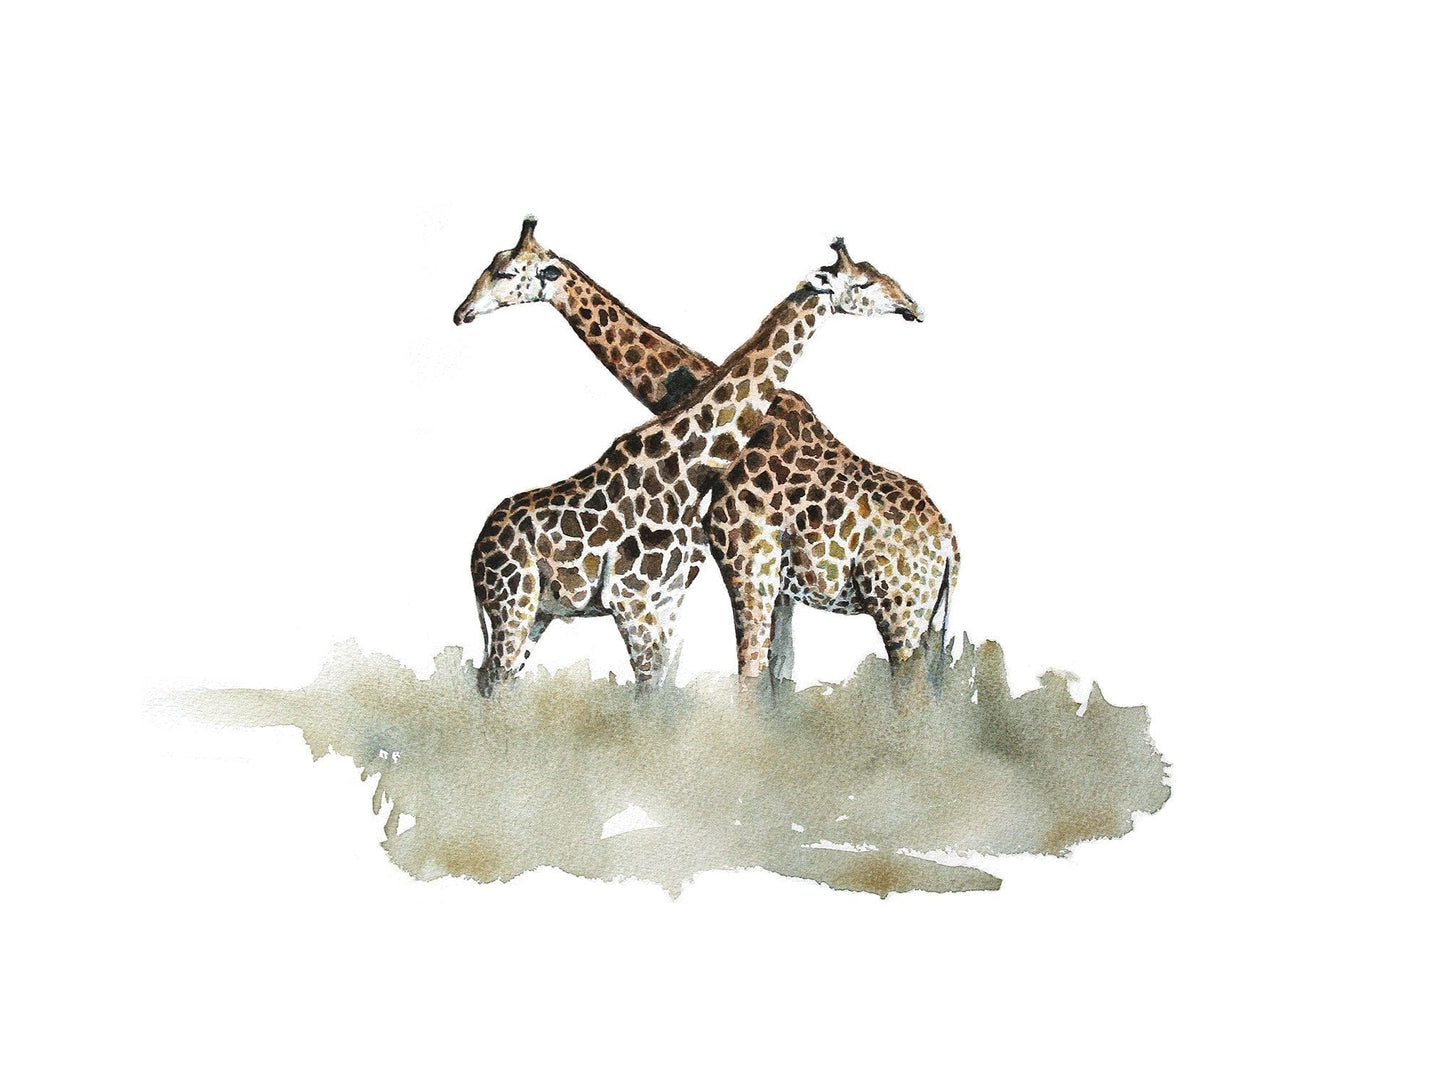 watercolor artwork painting of two giraffes